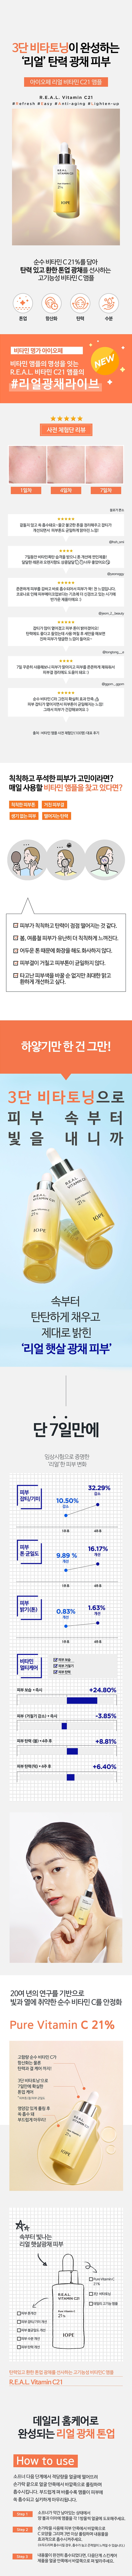 IOPE R.E.A.L. Vitamin C21 Ampoule korean skincare product online shop malaysia india thailand1